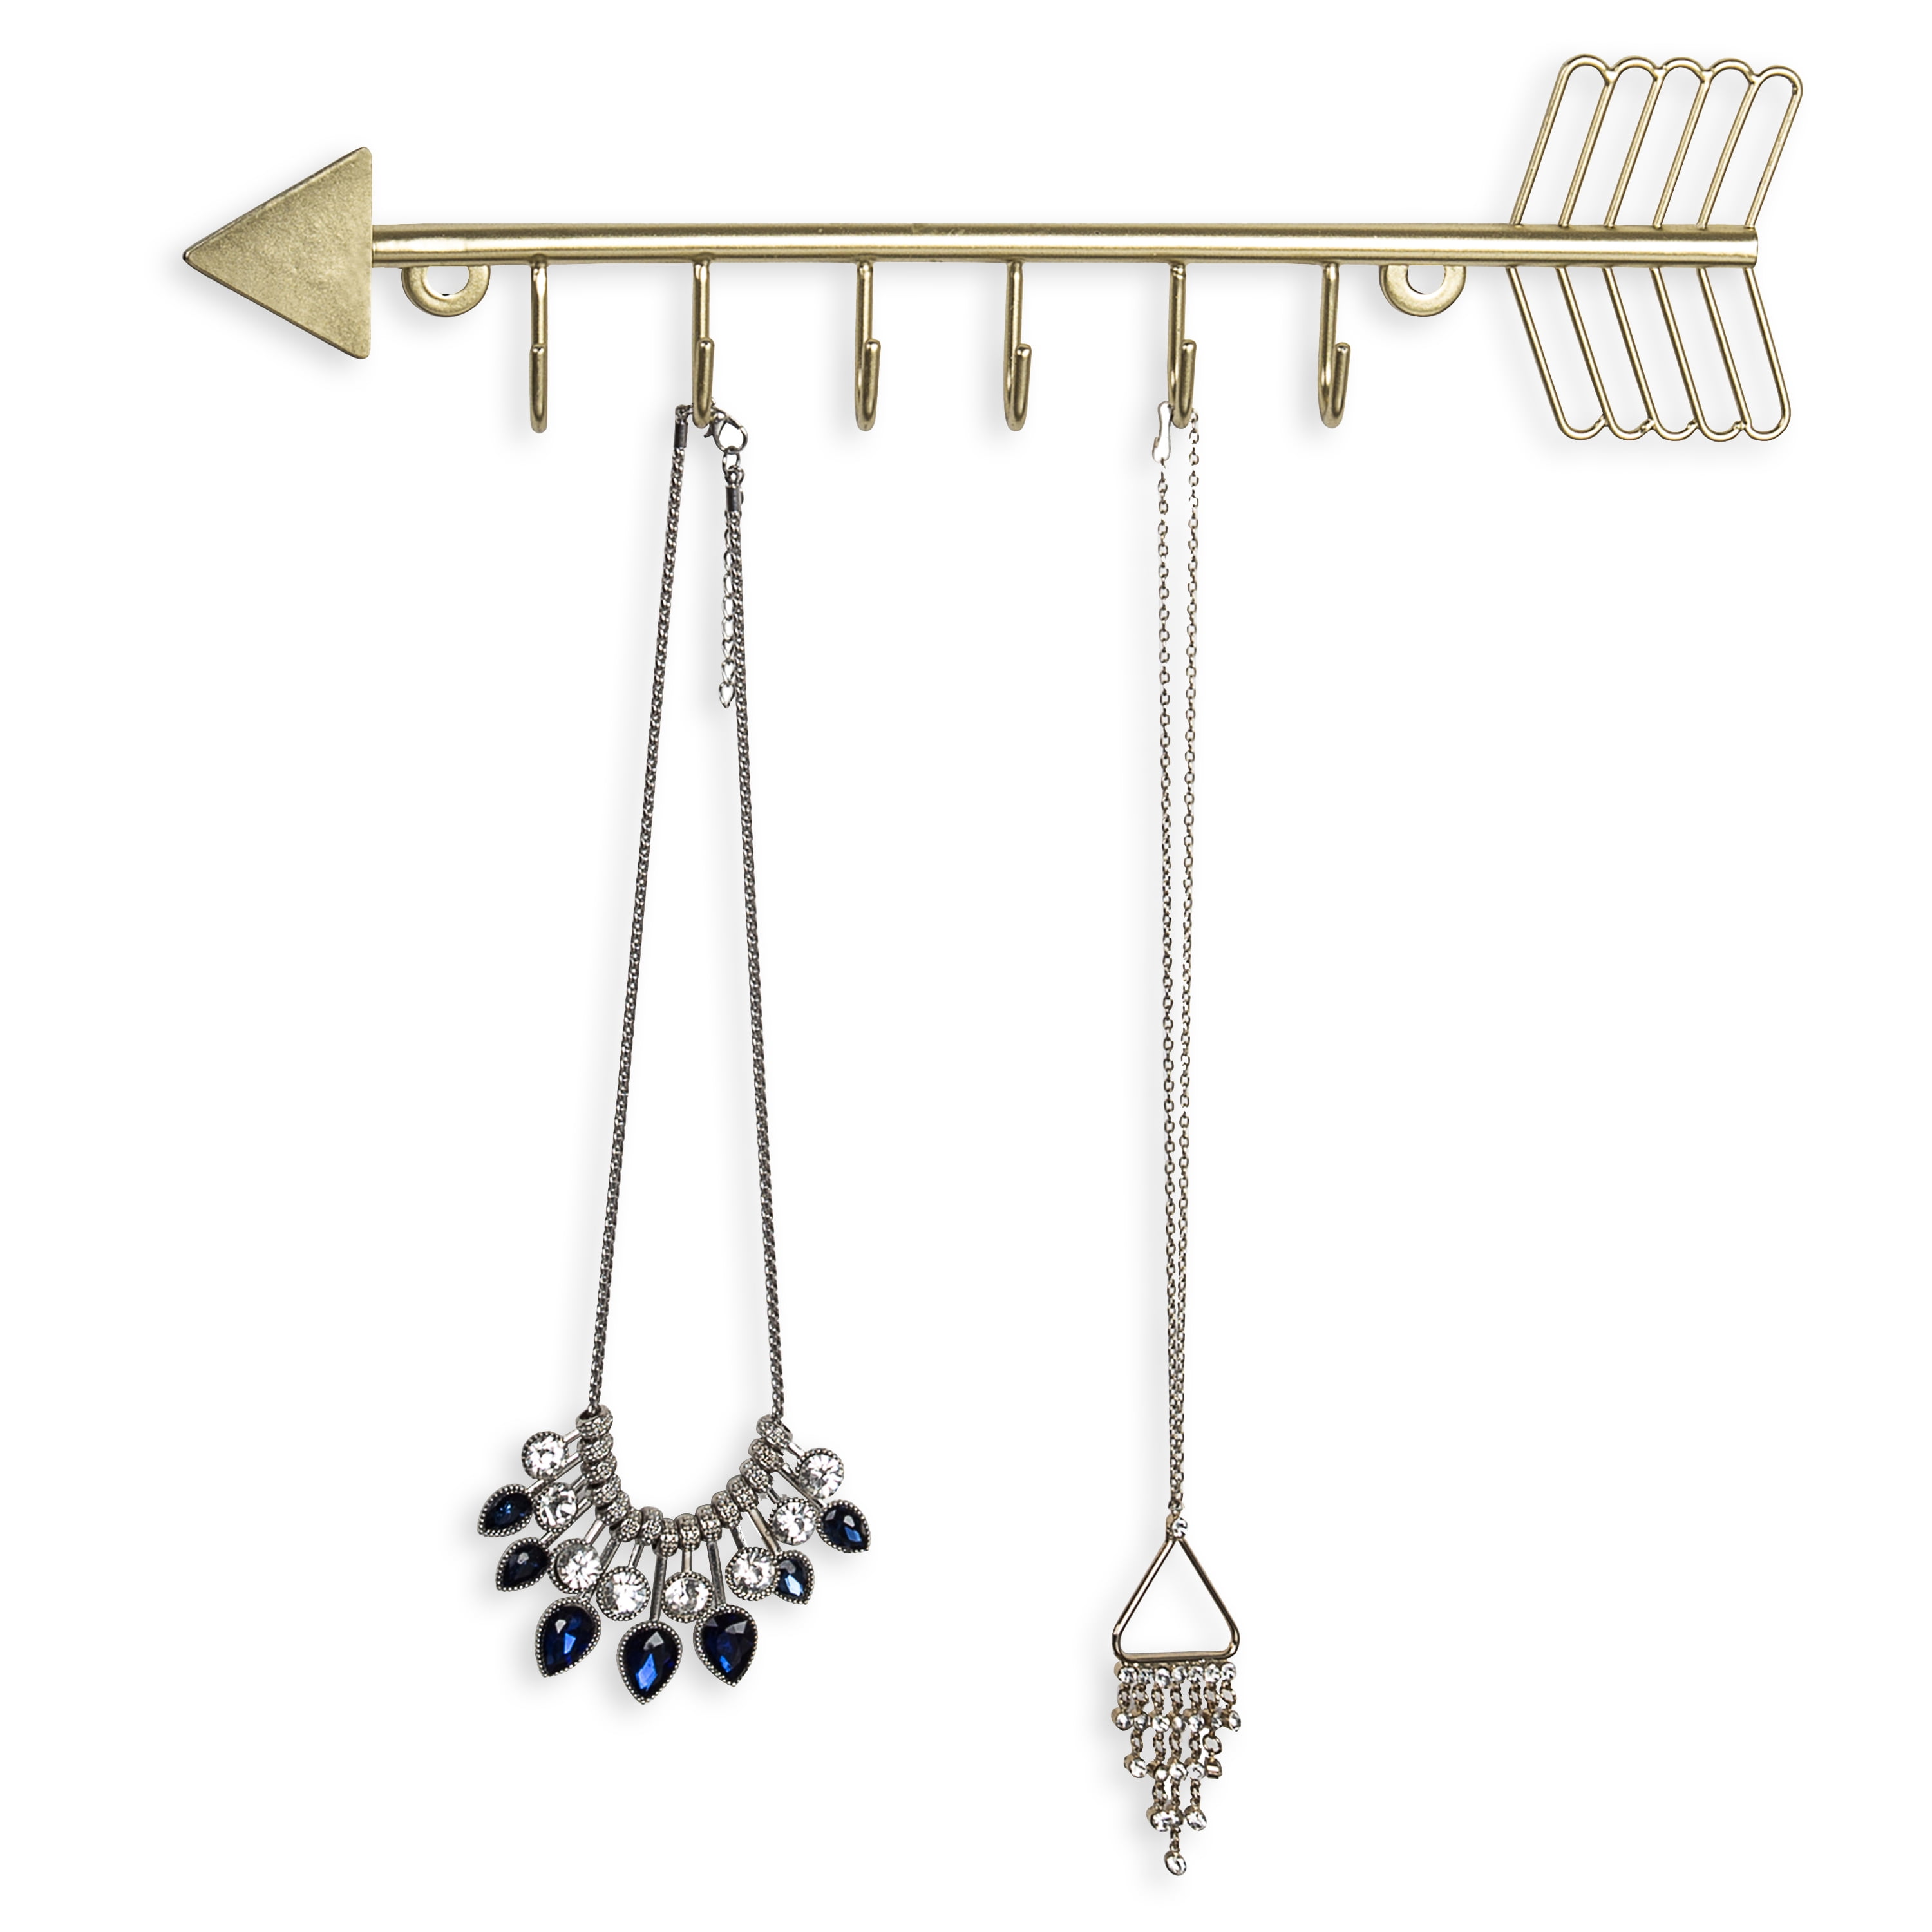 Arrow Design Wall Mounted Brass Metal 6 Hook Necklace Organizer Hanging Rack 